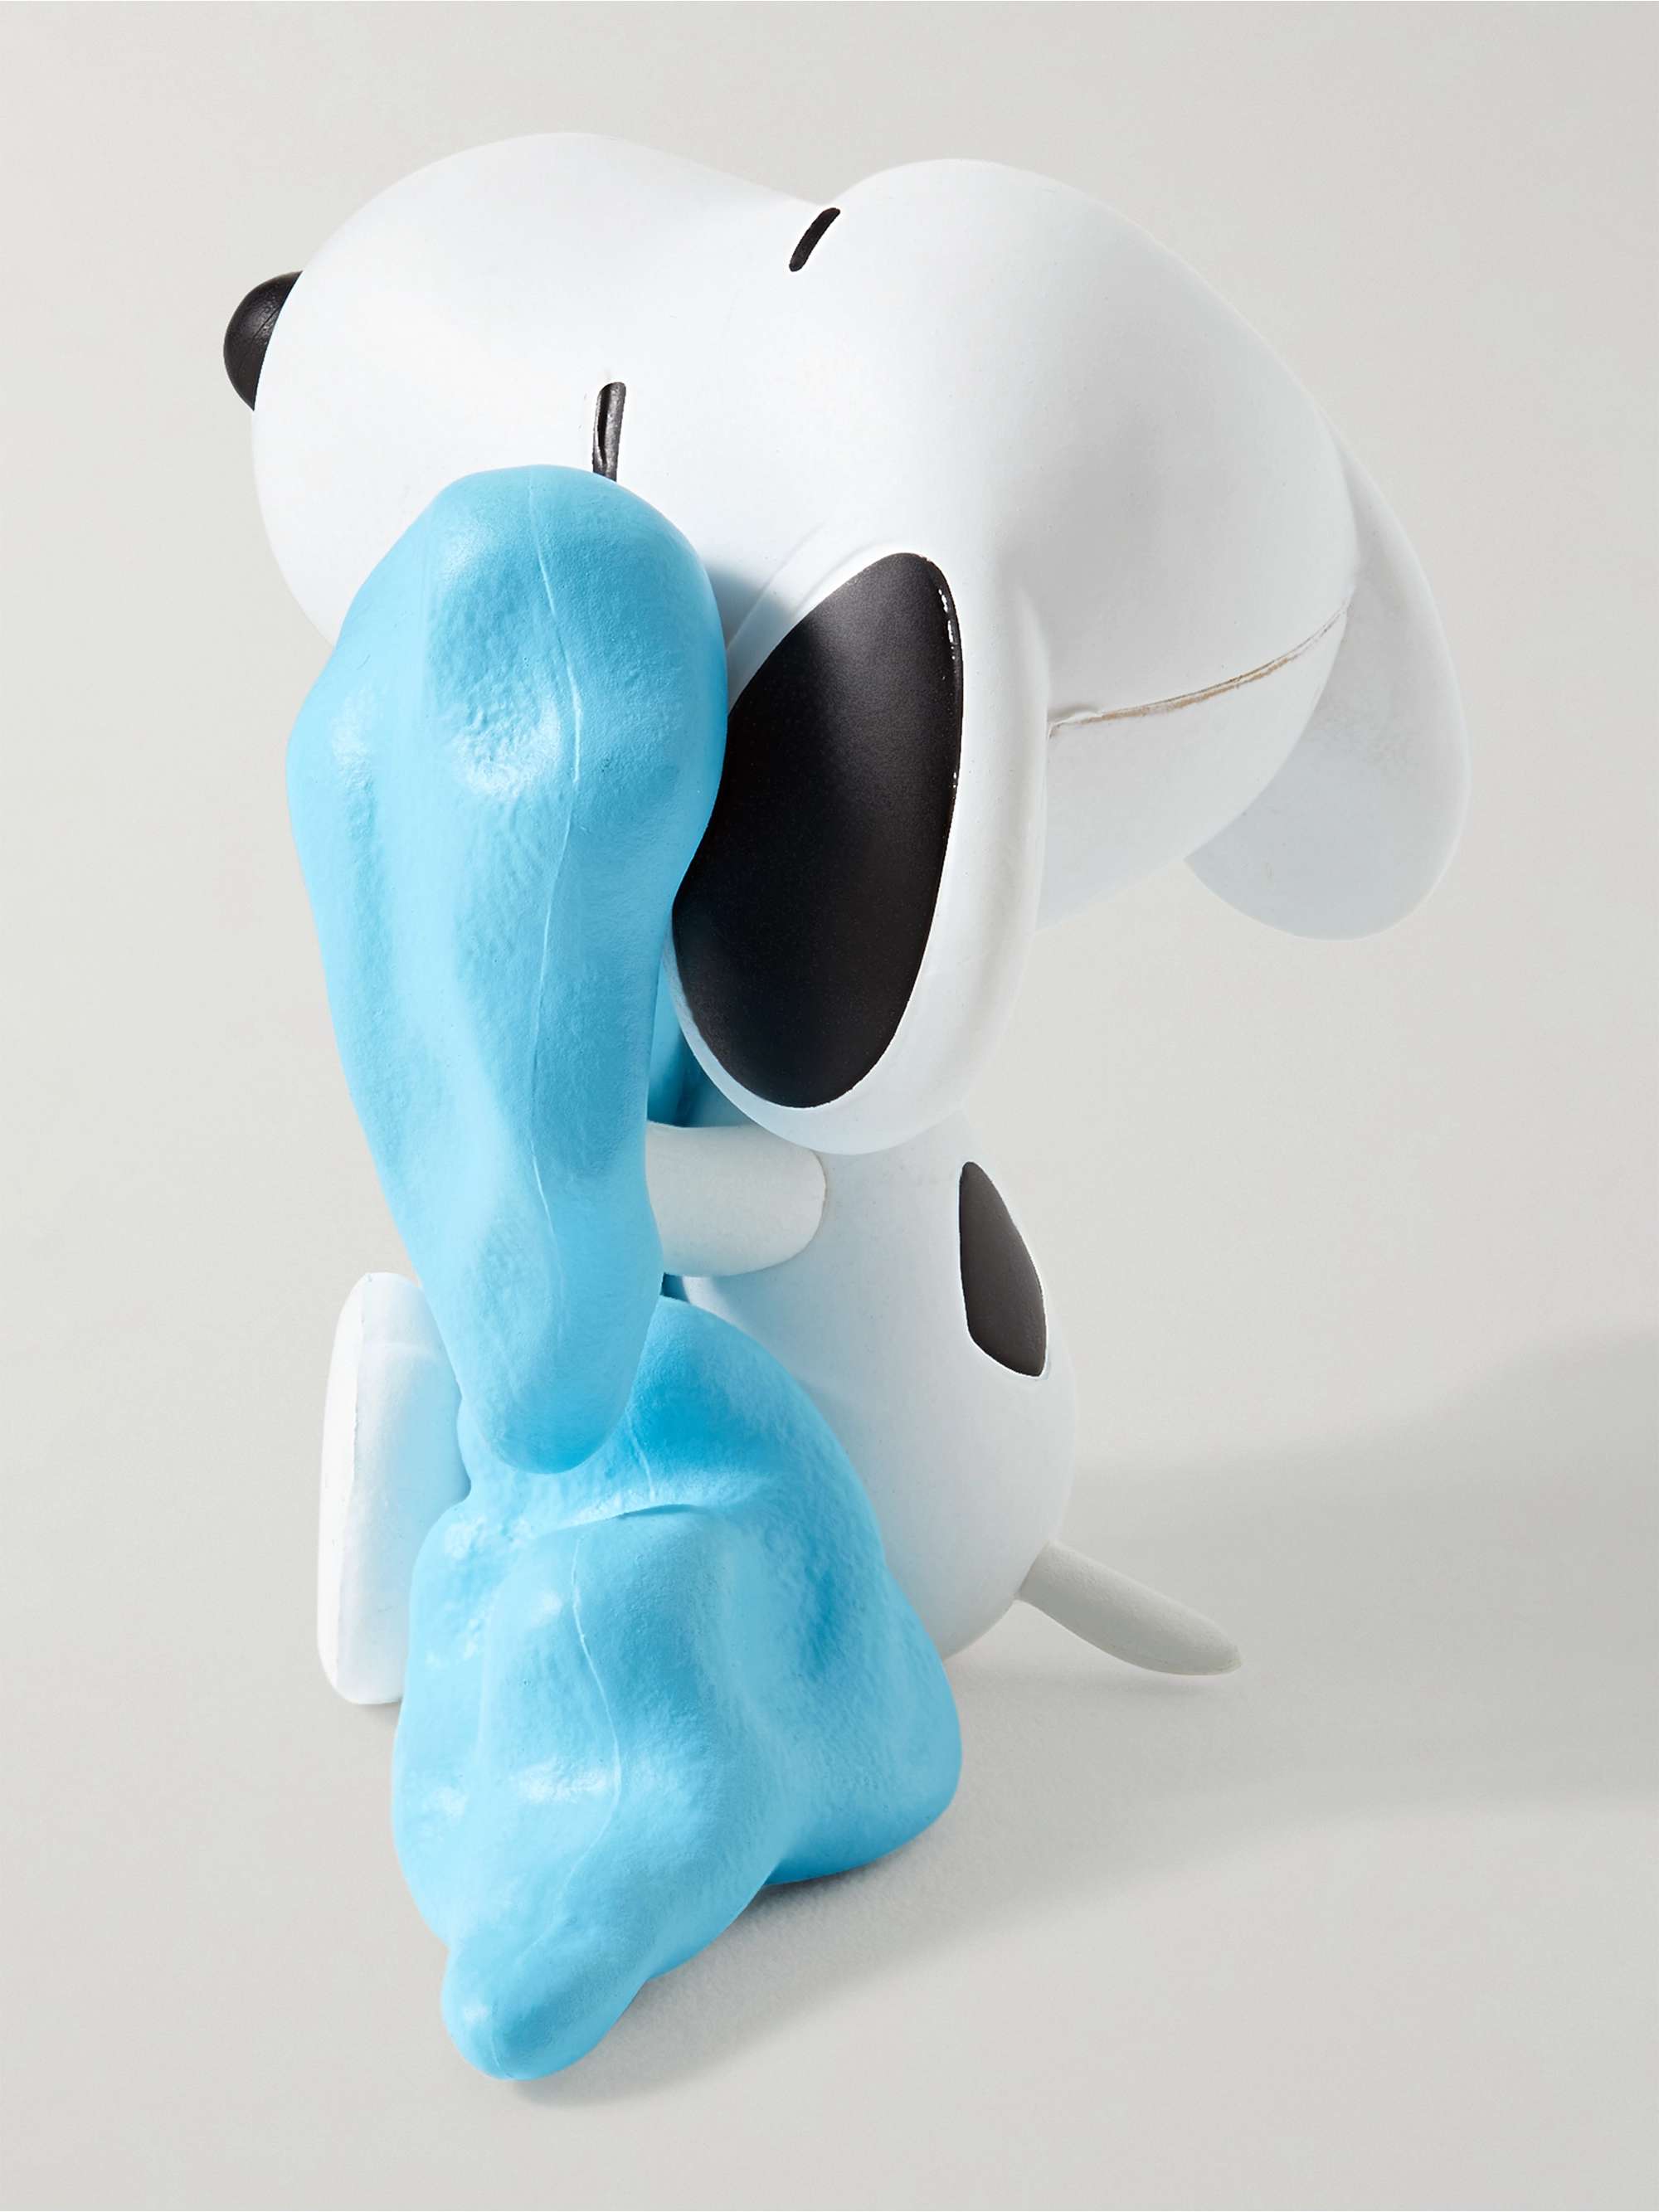 MEDICOM Ultra Detail Figure Peanuts Series 12: Snoopy with Linus' Blanket